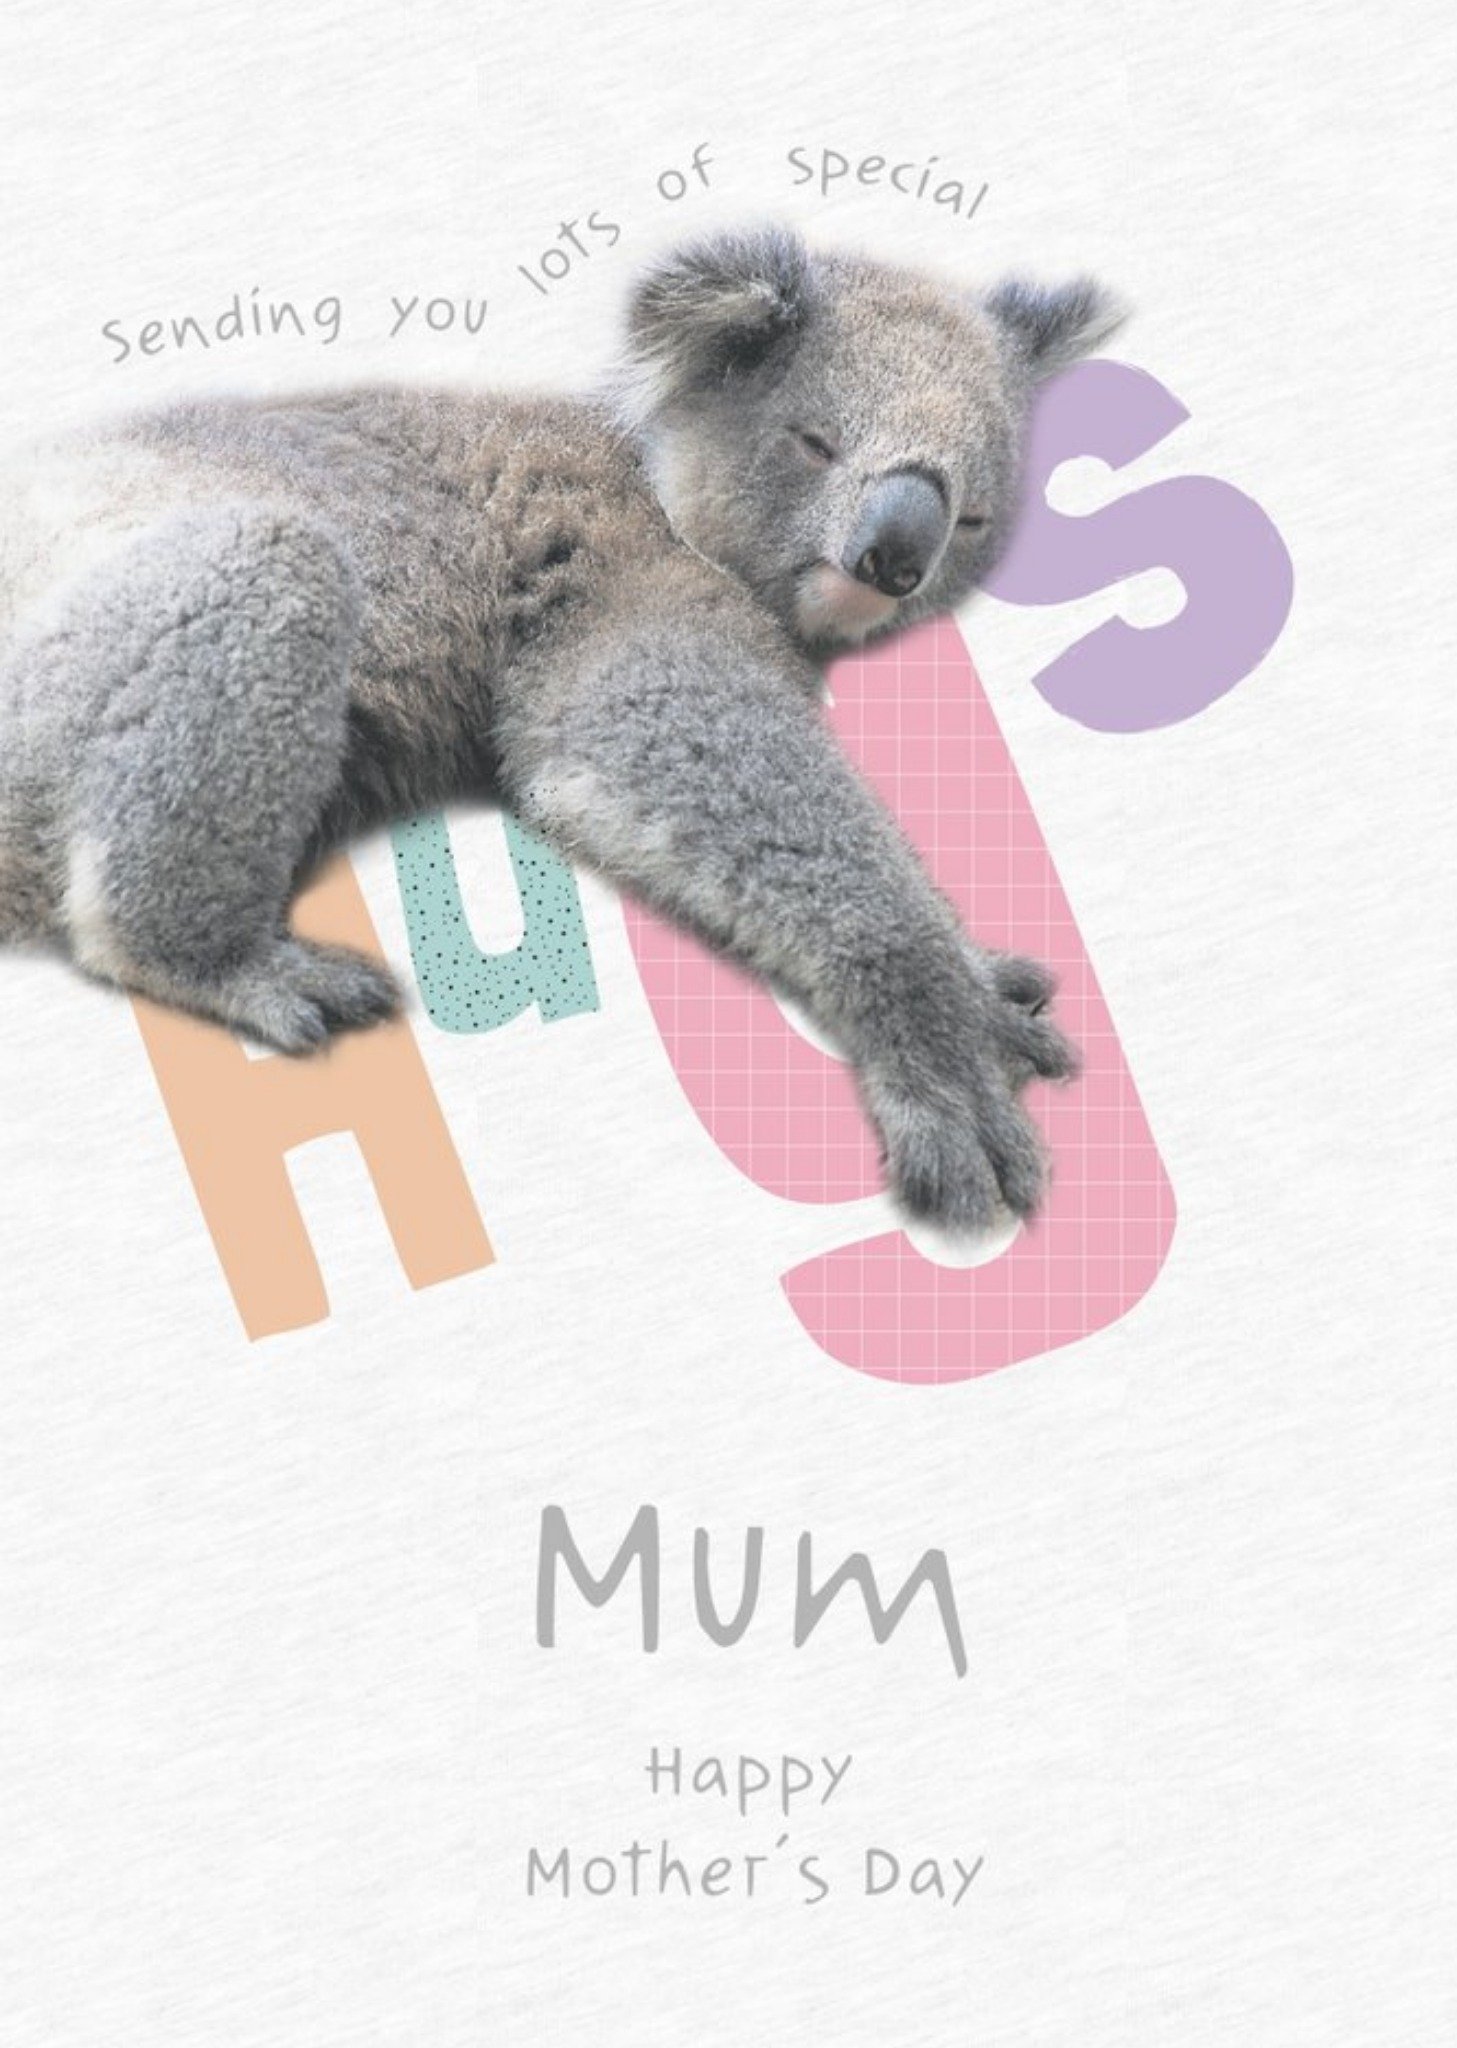 Moonpig Animal Planet Sending You Lots Of Special Hugs Koala Mother's Day Card Ecard